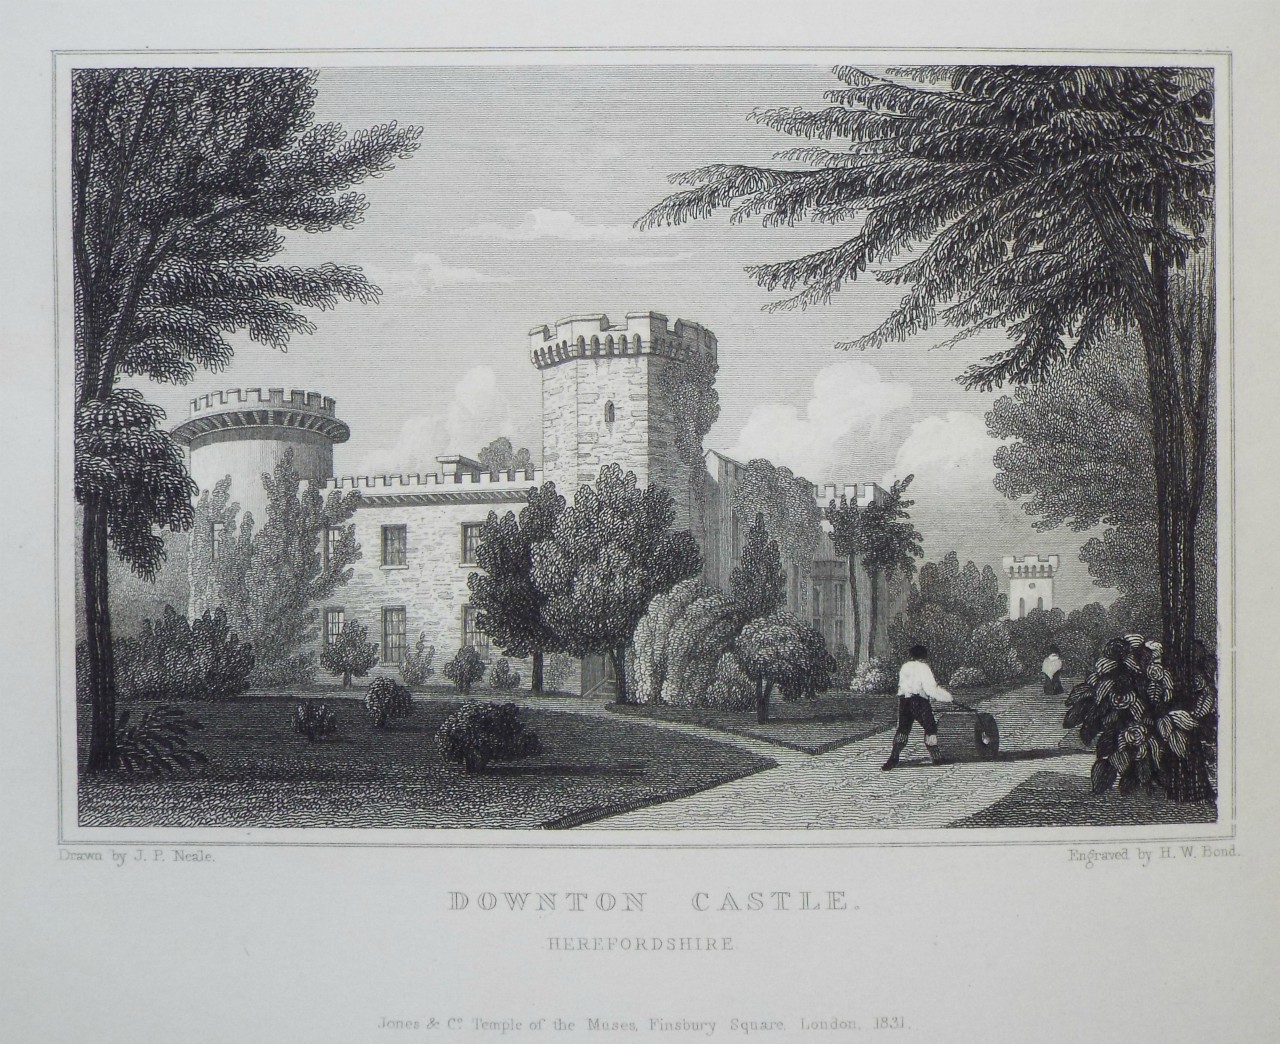 Print - Downton Castle. Herefordshire. - Bond